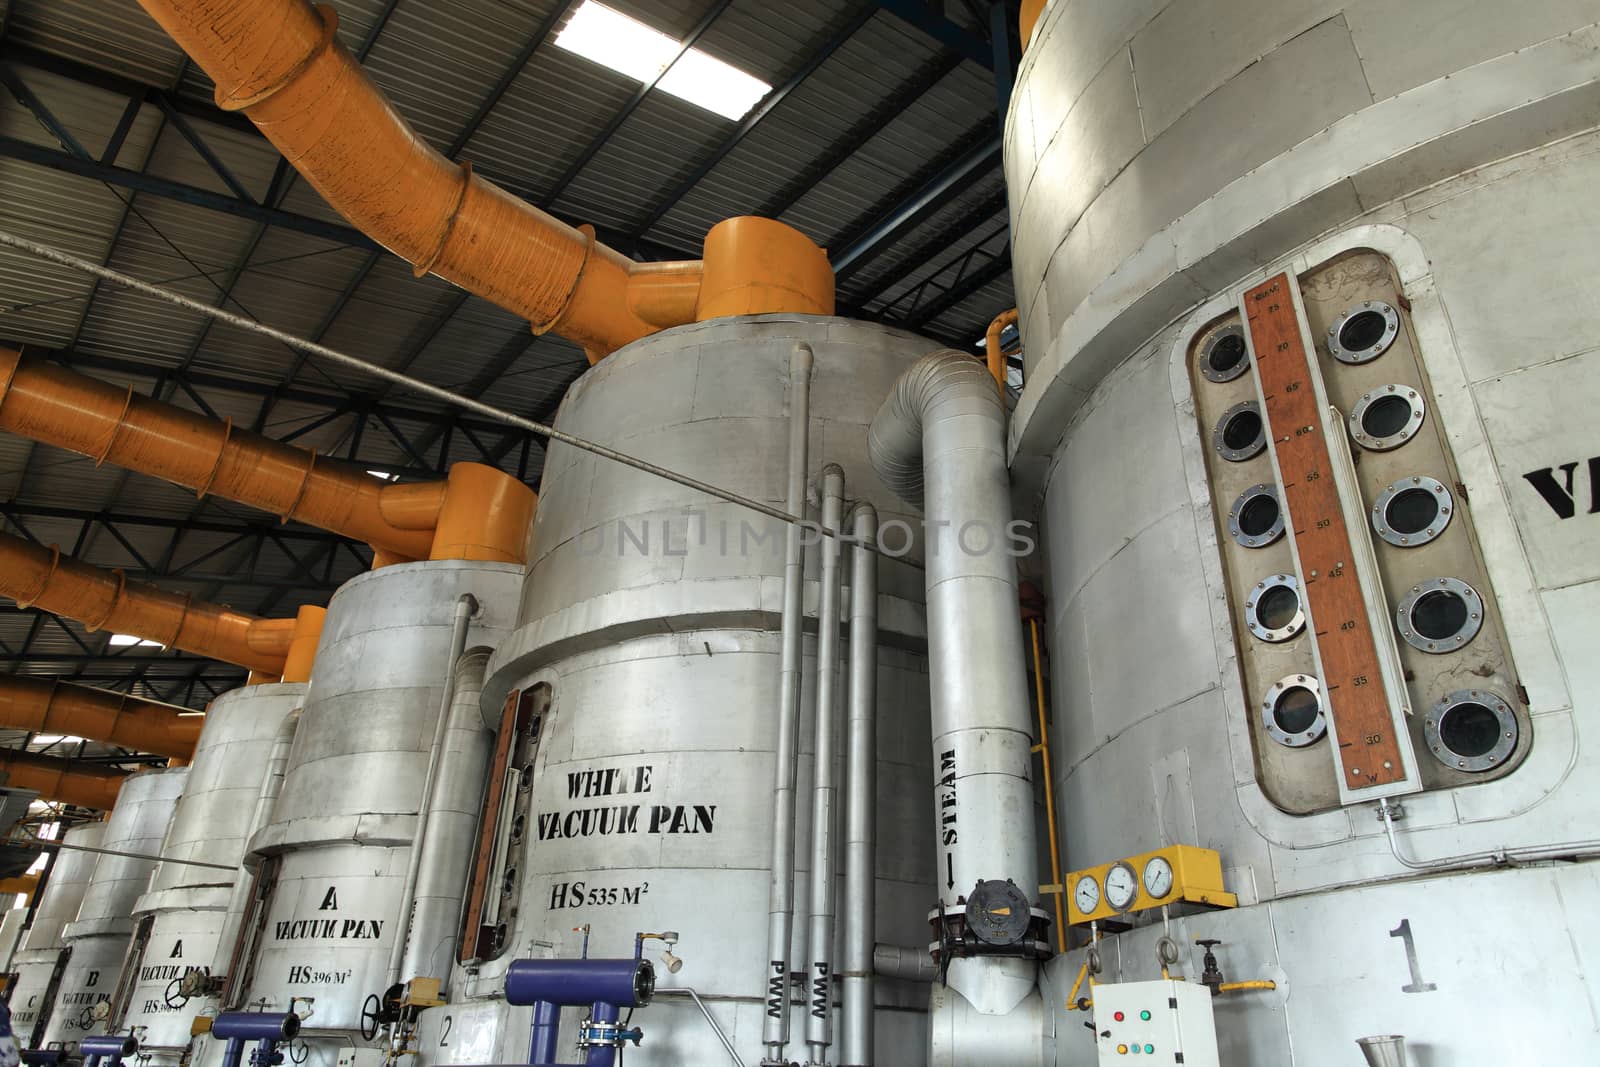 vacuum pan processing equipment in a modern sugar mill factory